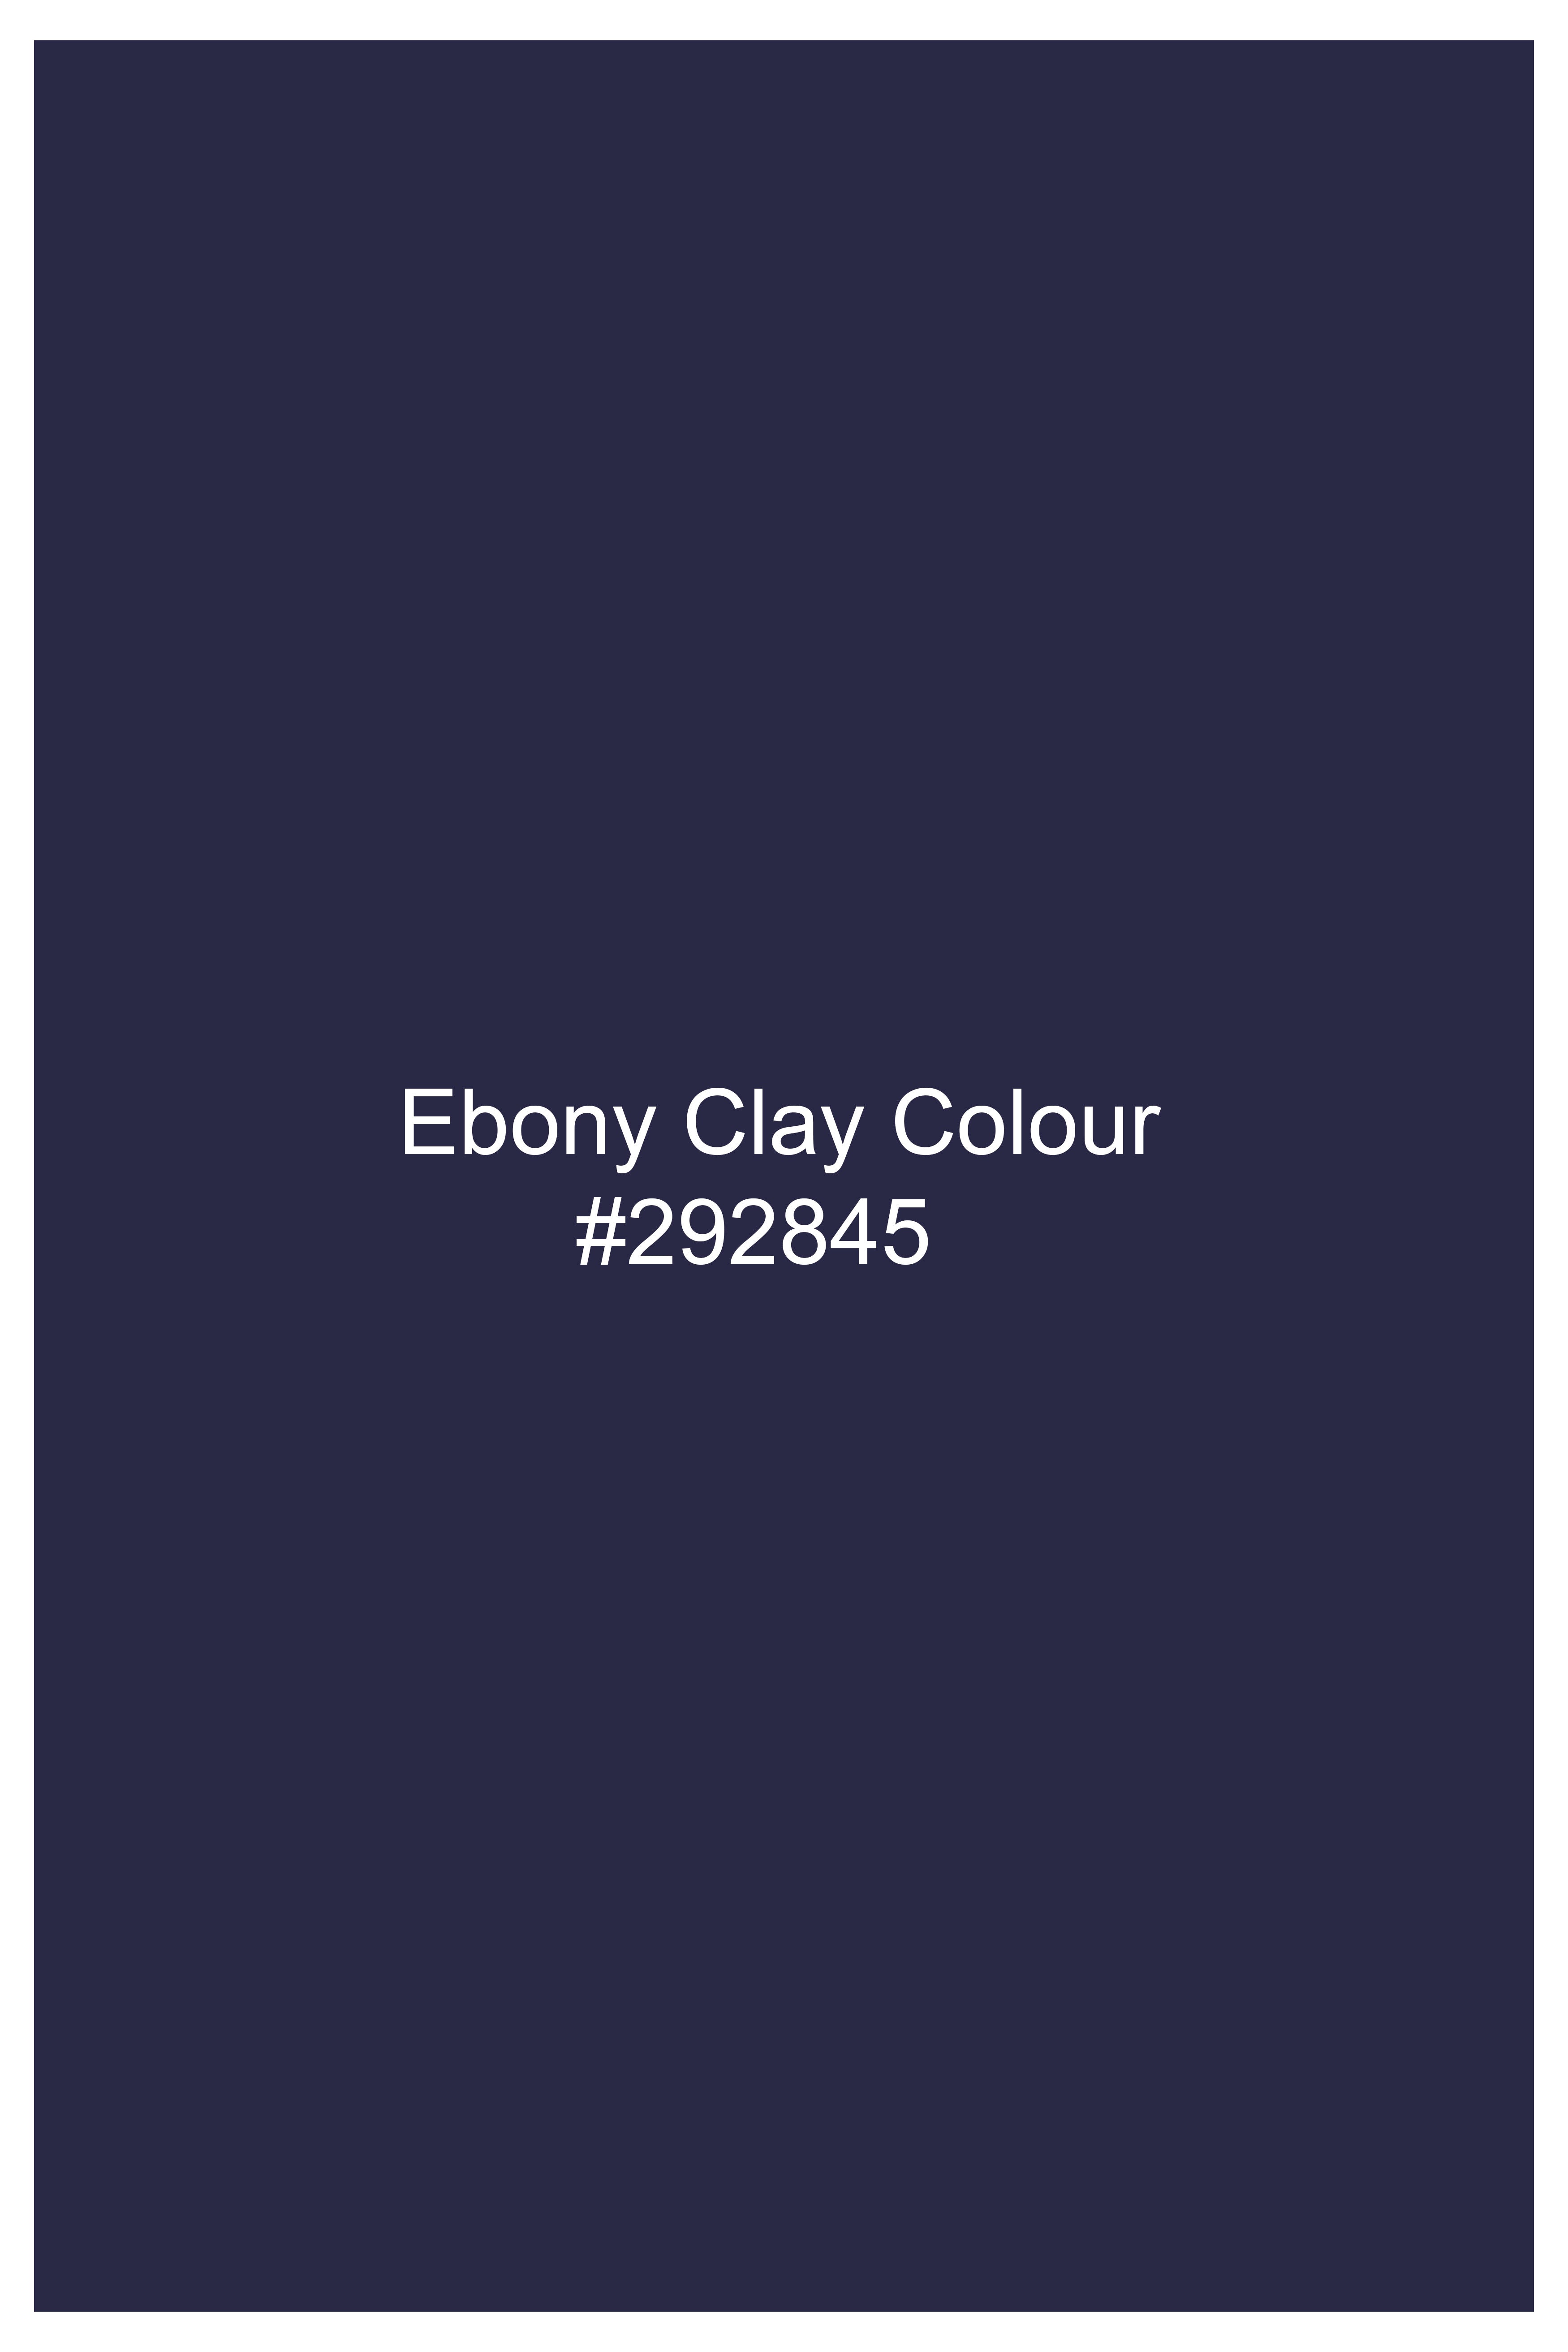 Ebony Clay Blue Wool Rich Double Breasted Blazer BL3062-DB-GB-36, BL3062-DB-GB-38, BL3062-DB-GB-40, BL3062-DB-GB-42, BL3062-DB-GB-44, BL3062-DB-GB-46, BL3062-DB-GB-48, BL3062-DB-GB-50, BL3062-DB-GB-52, BL3062-DB-GB-54, BL3062-DB-GB-56, BL3062-DB-GB-58, BL3062-DB-GB-60